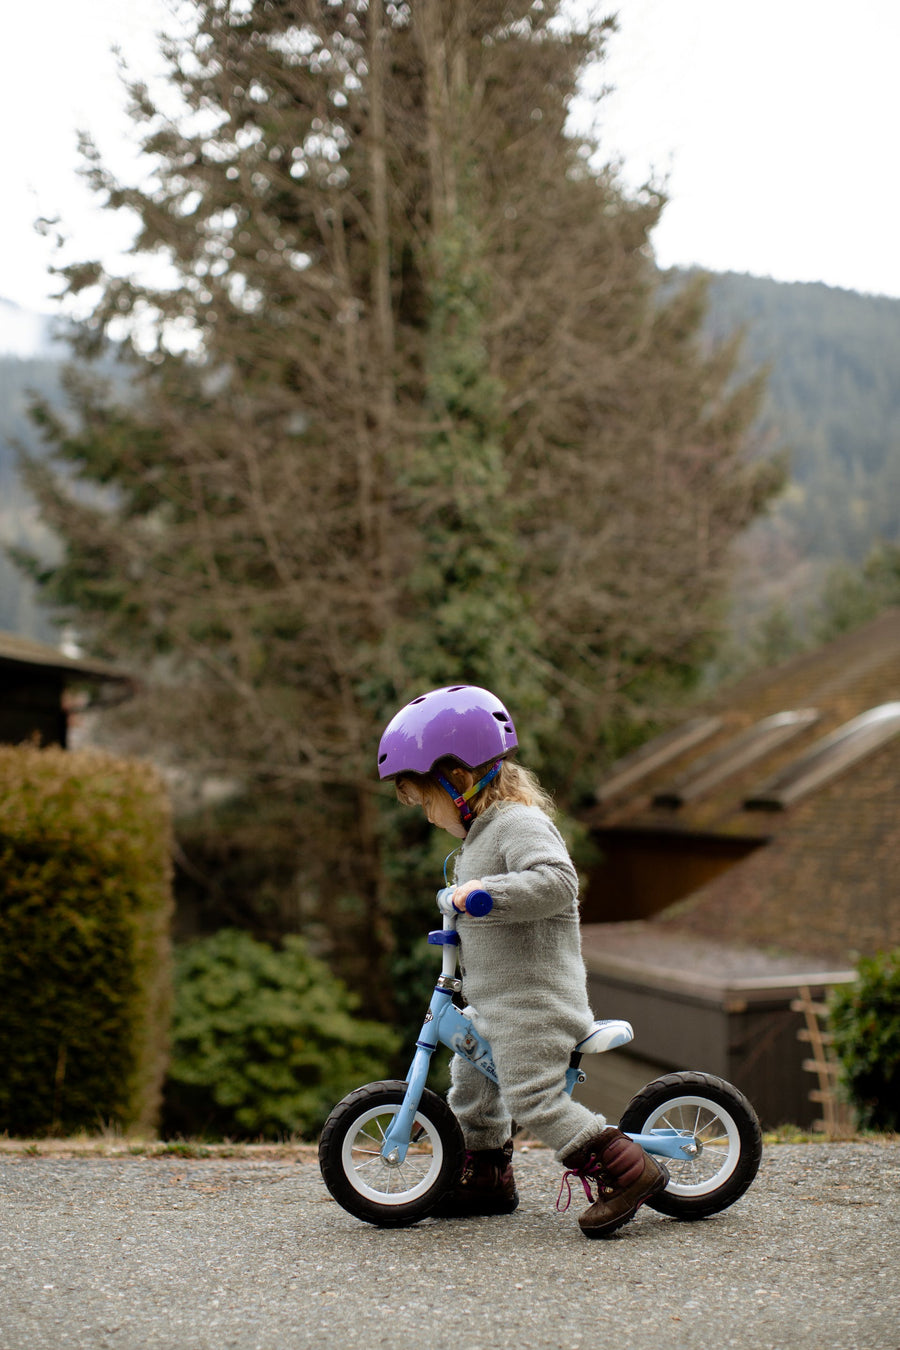  a child on a balance bike